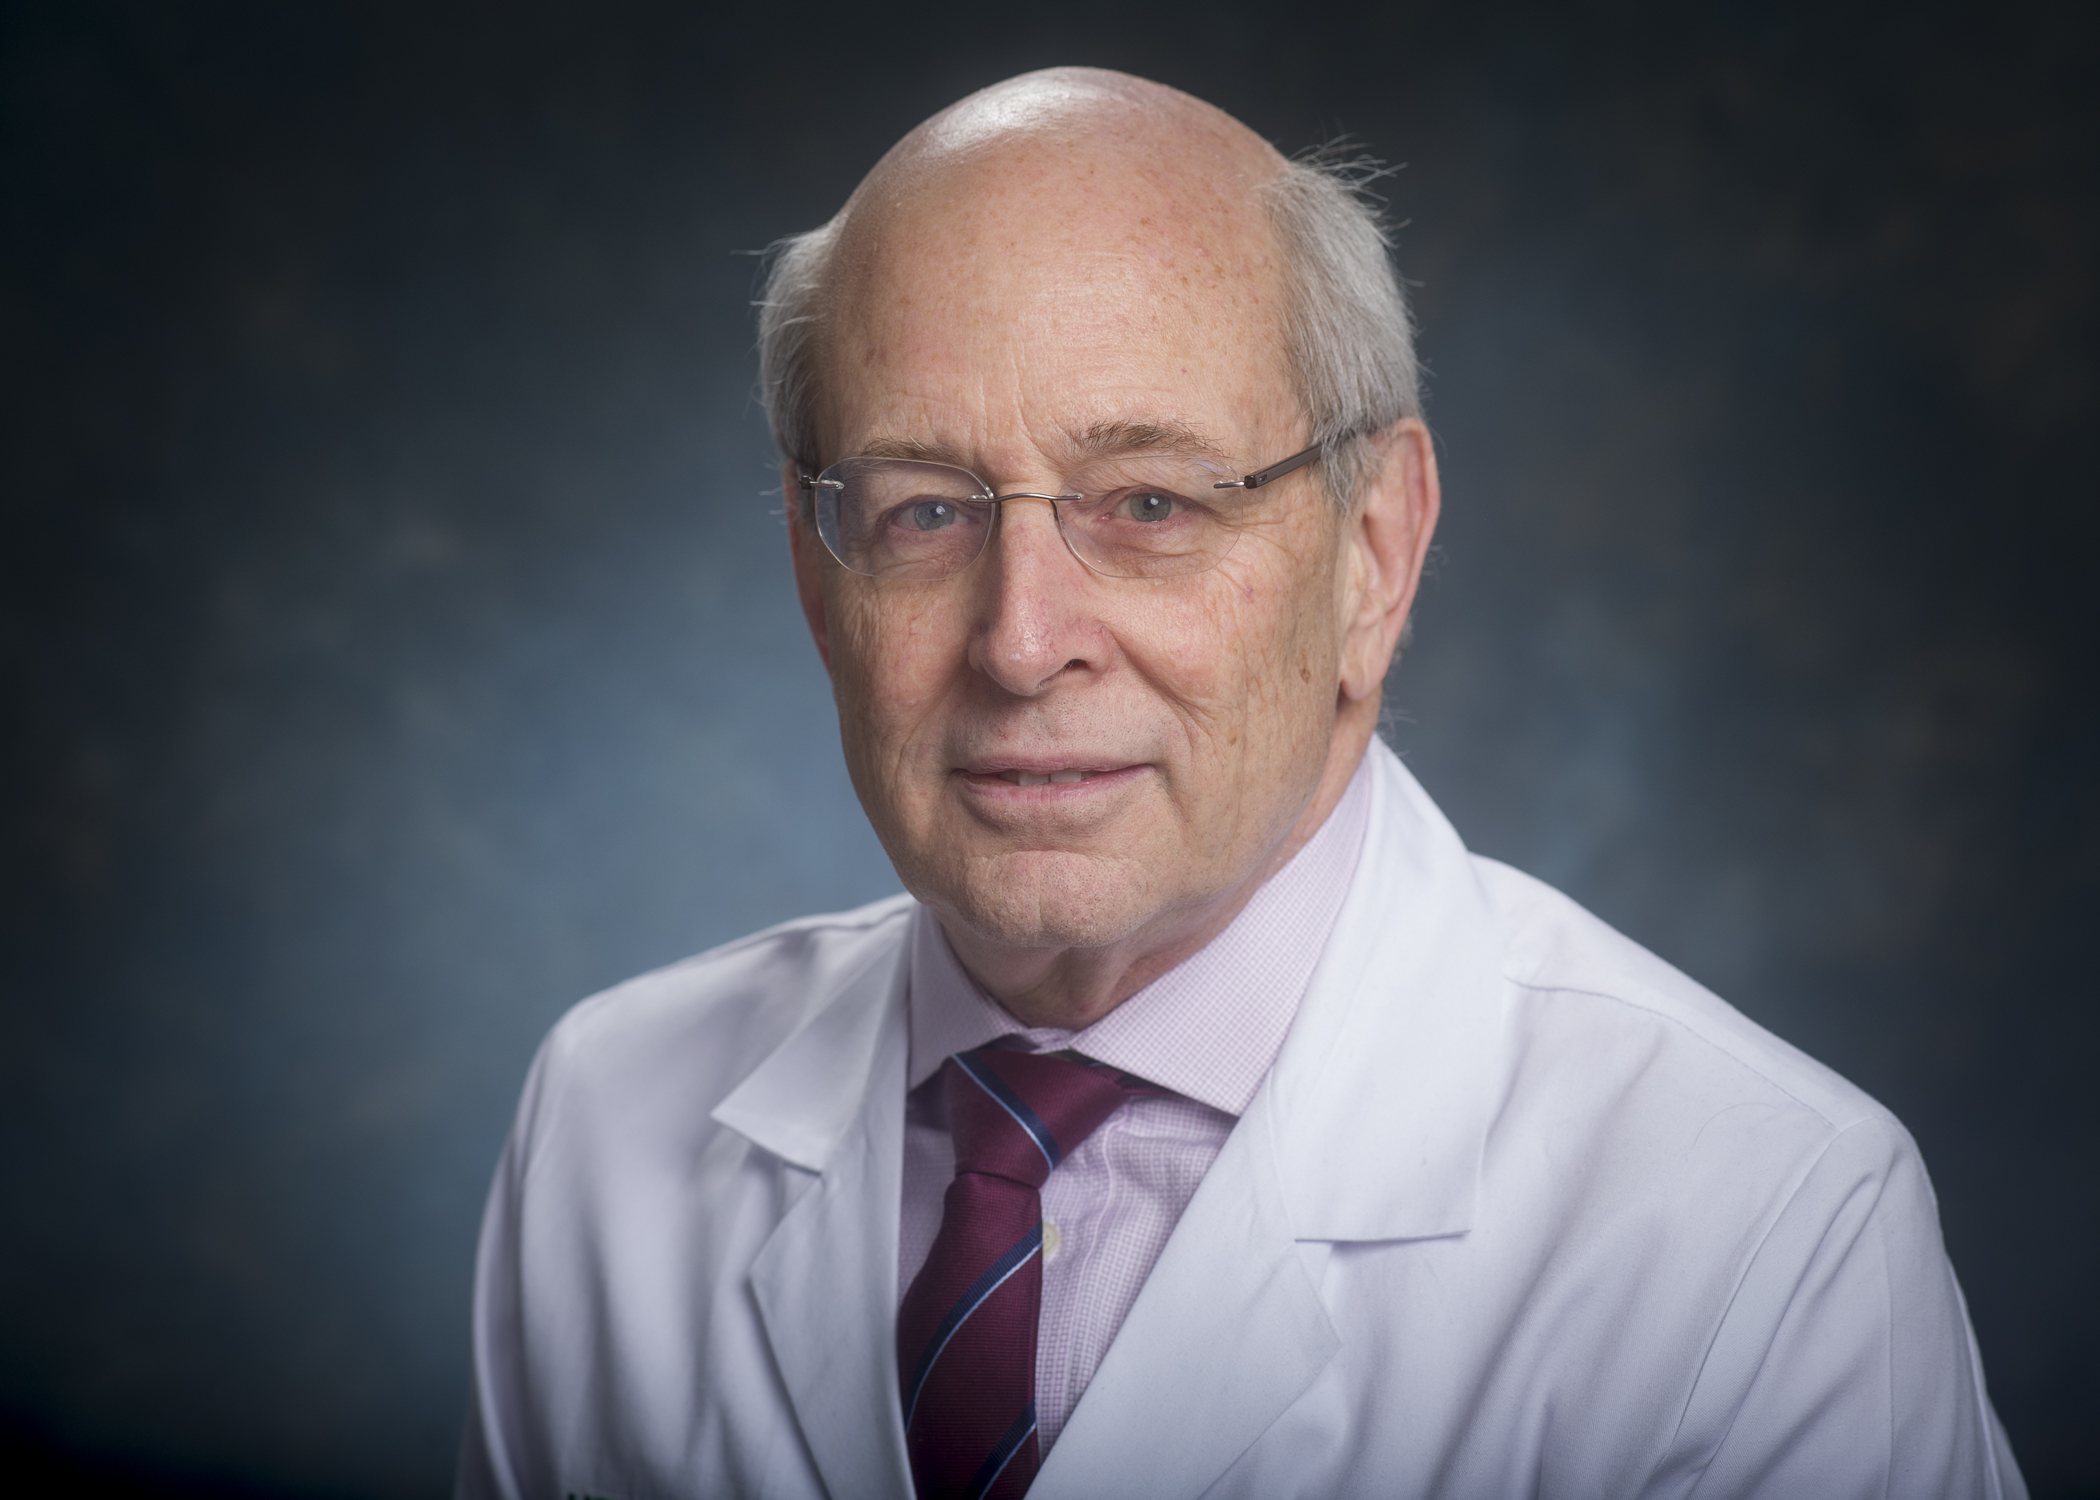 Head shot of Dr. Ronald Lazar, MD (Professor, Neurology) in white medical coat, 2018.